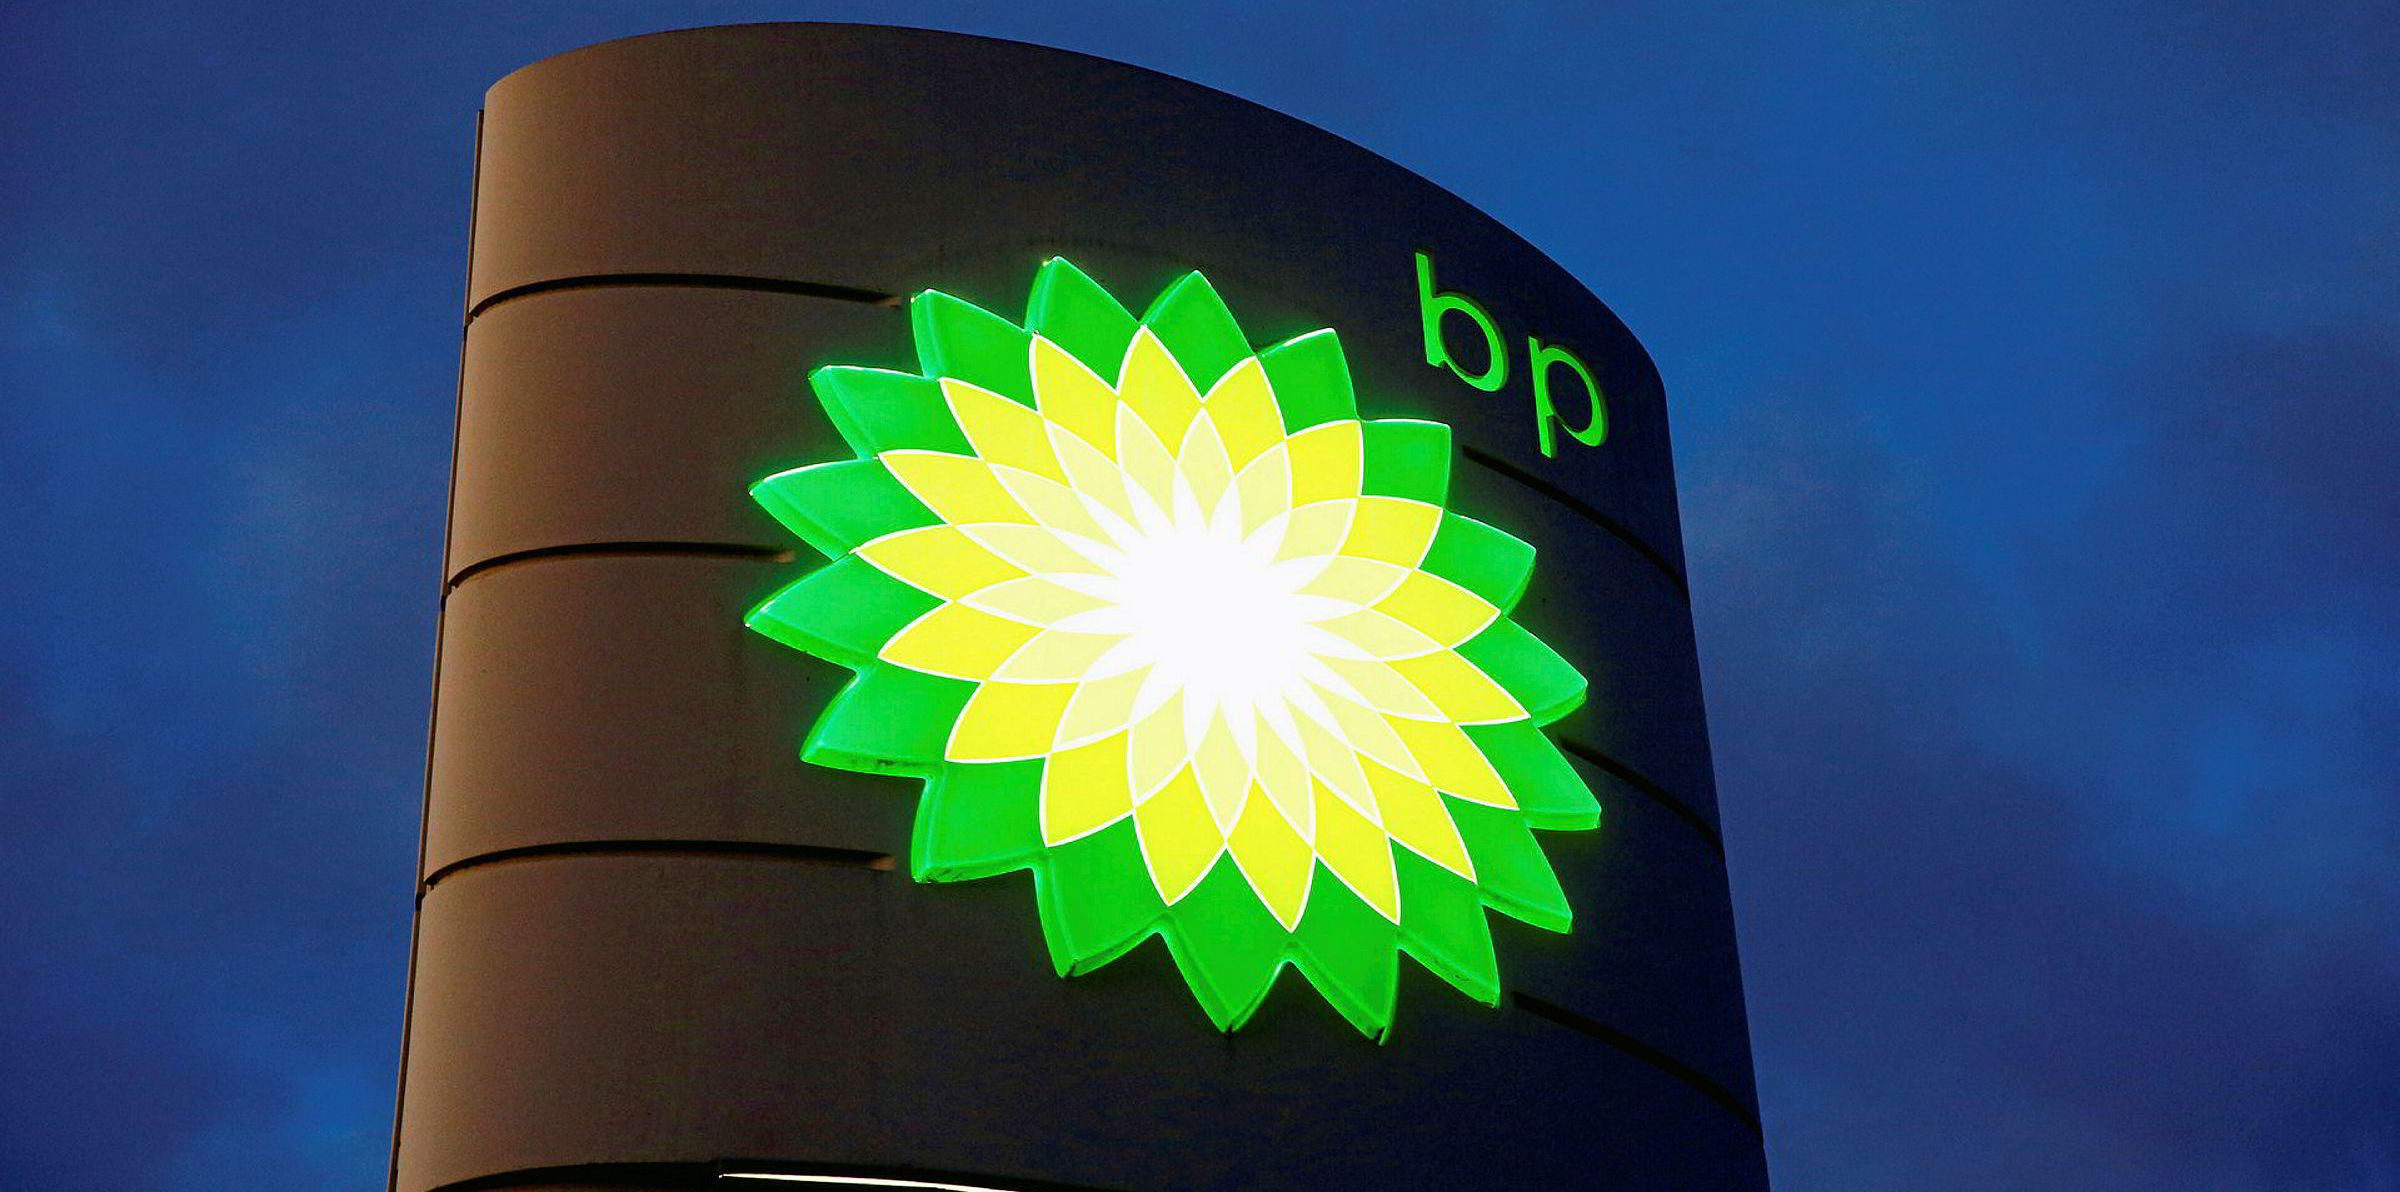 Image of BP logo on building, against background of dark sky